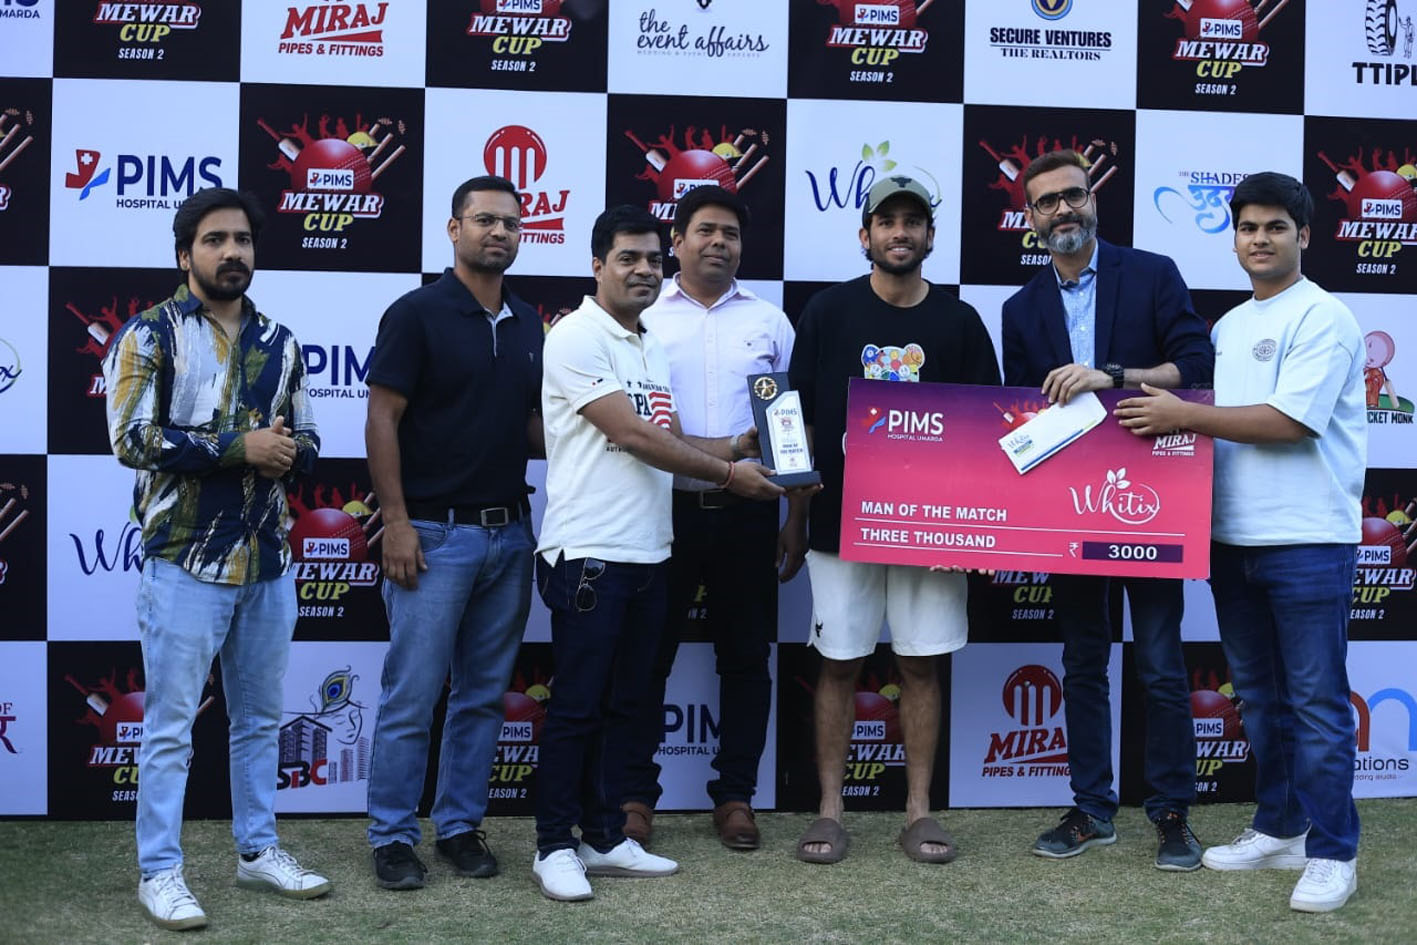 PIMS Mewar Cup": Super Over Decides Victory for Mewar Tourism Club